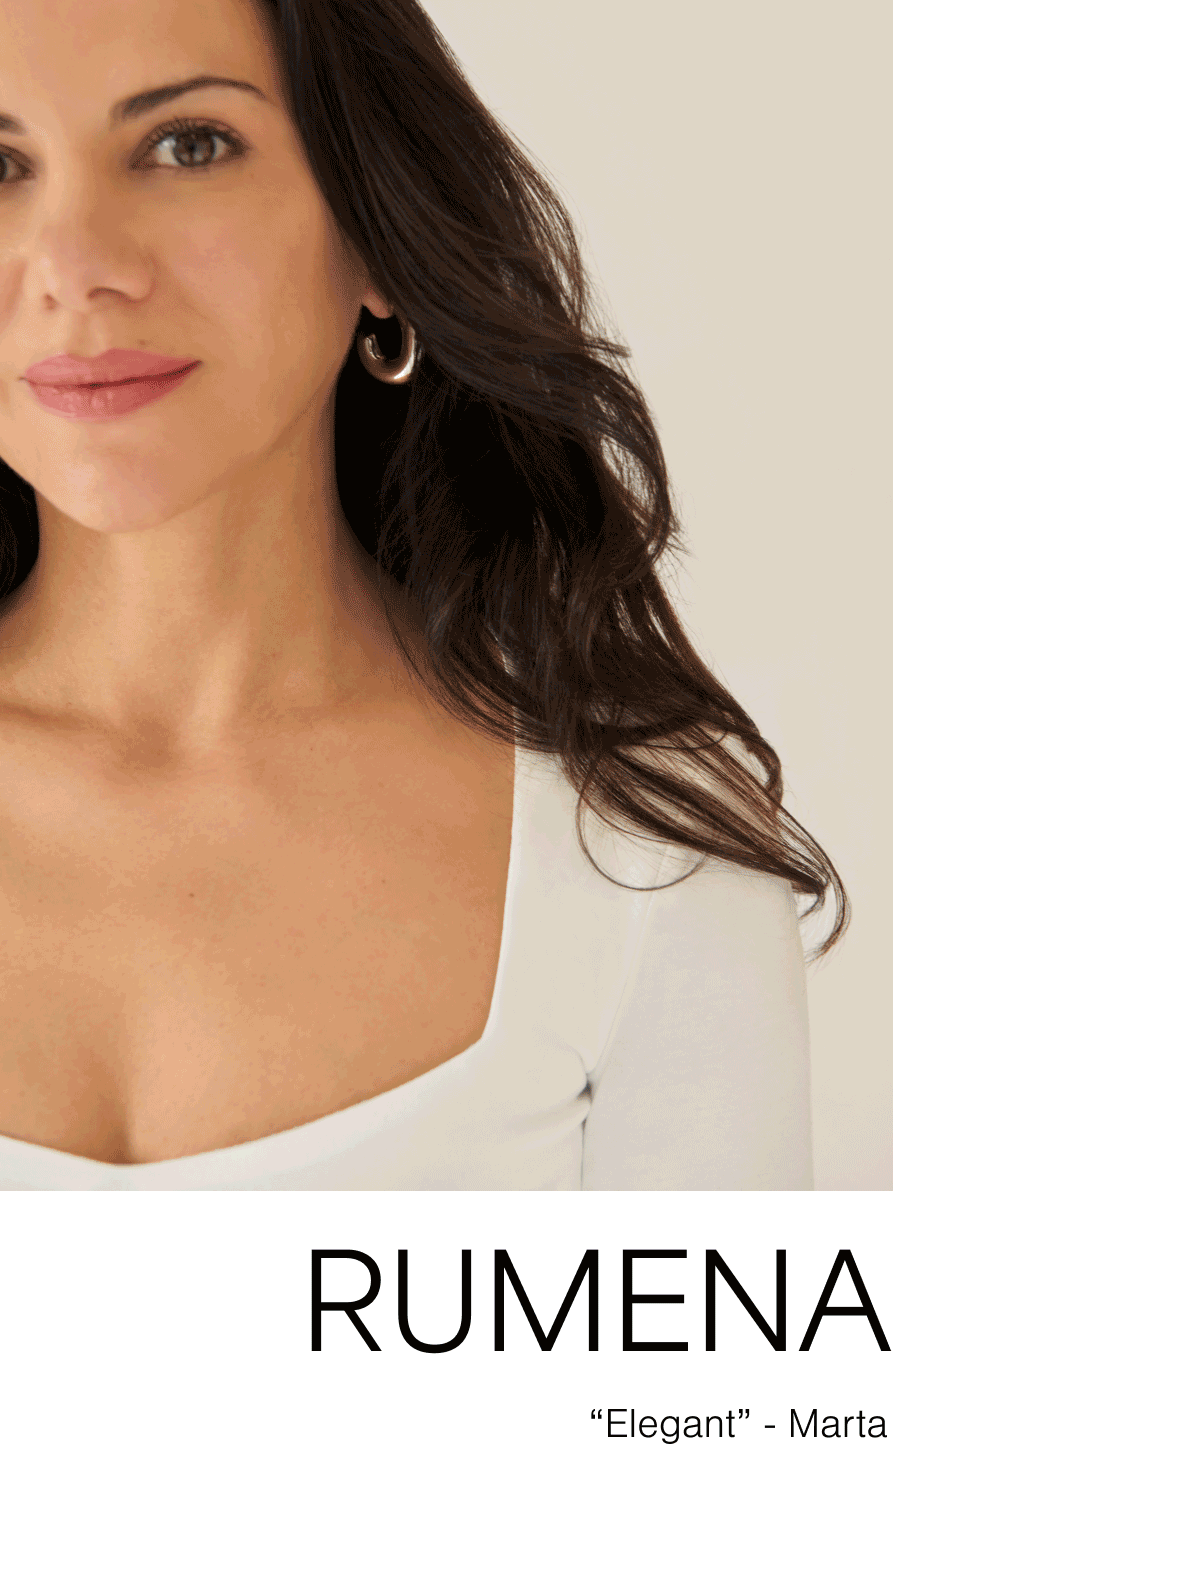 The Rumena Top